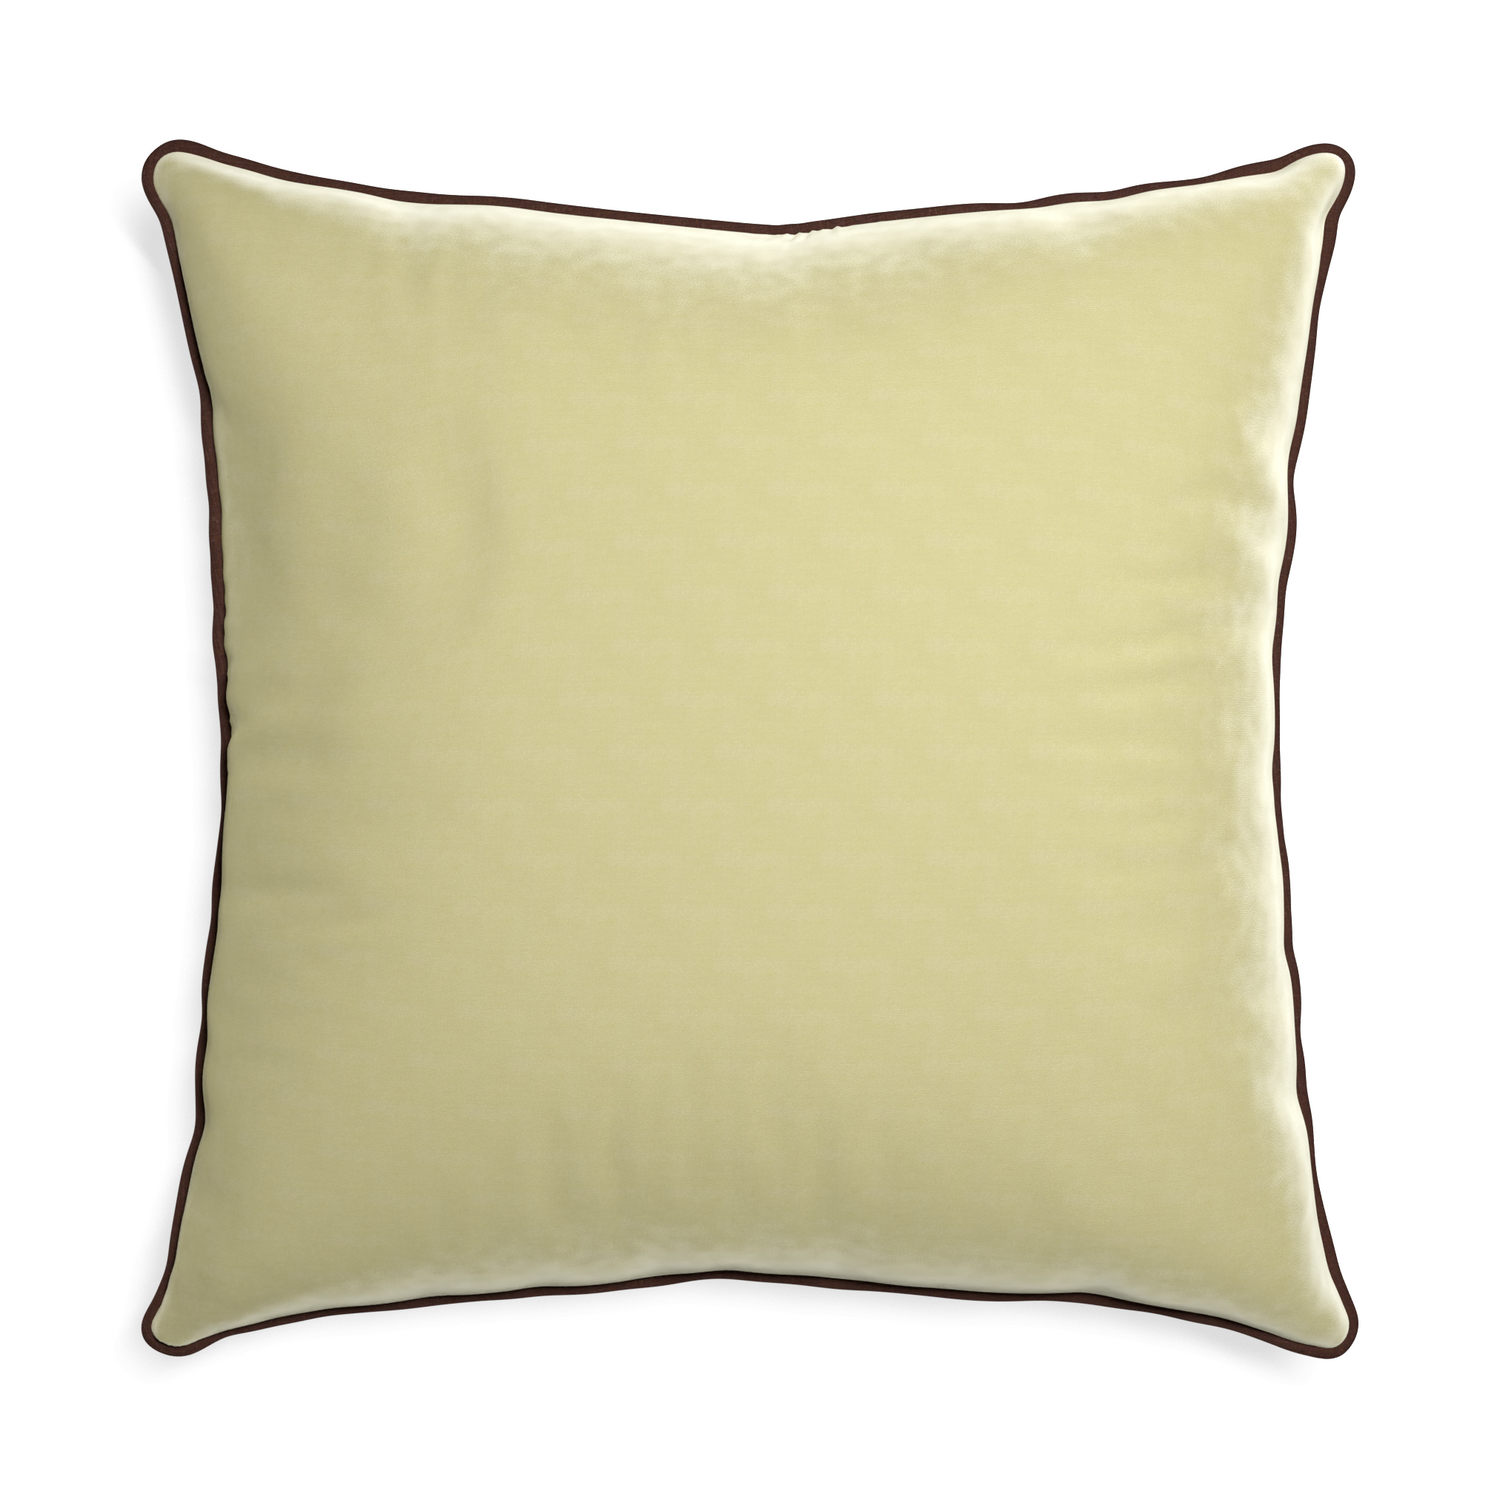 Euro-sham pear velvet custom pillow with w piping on white background